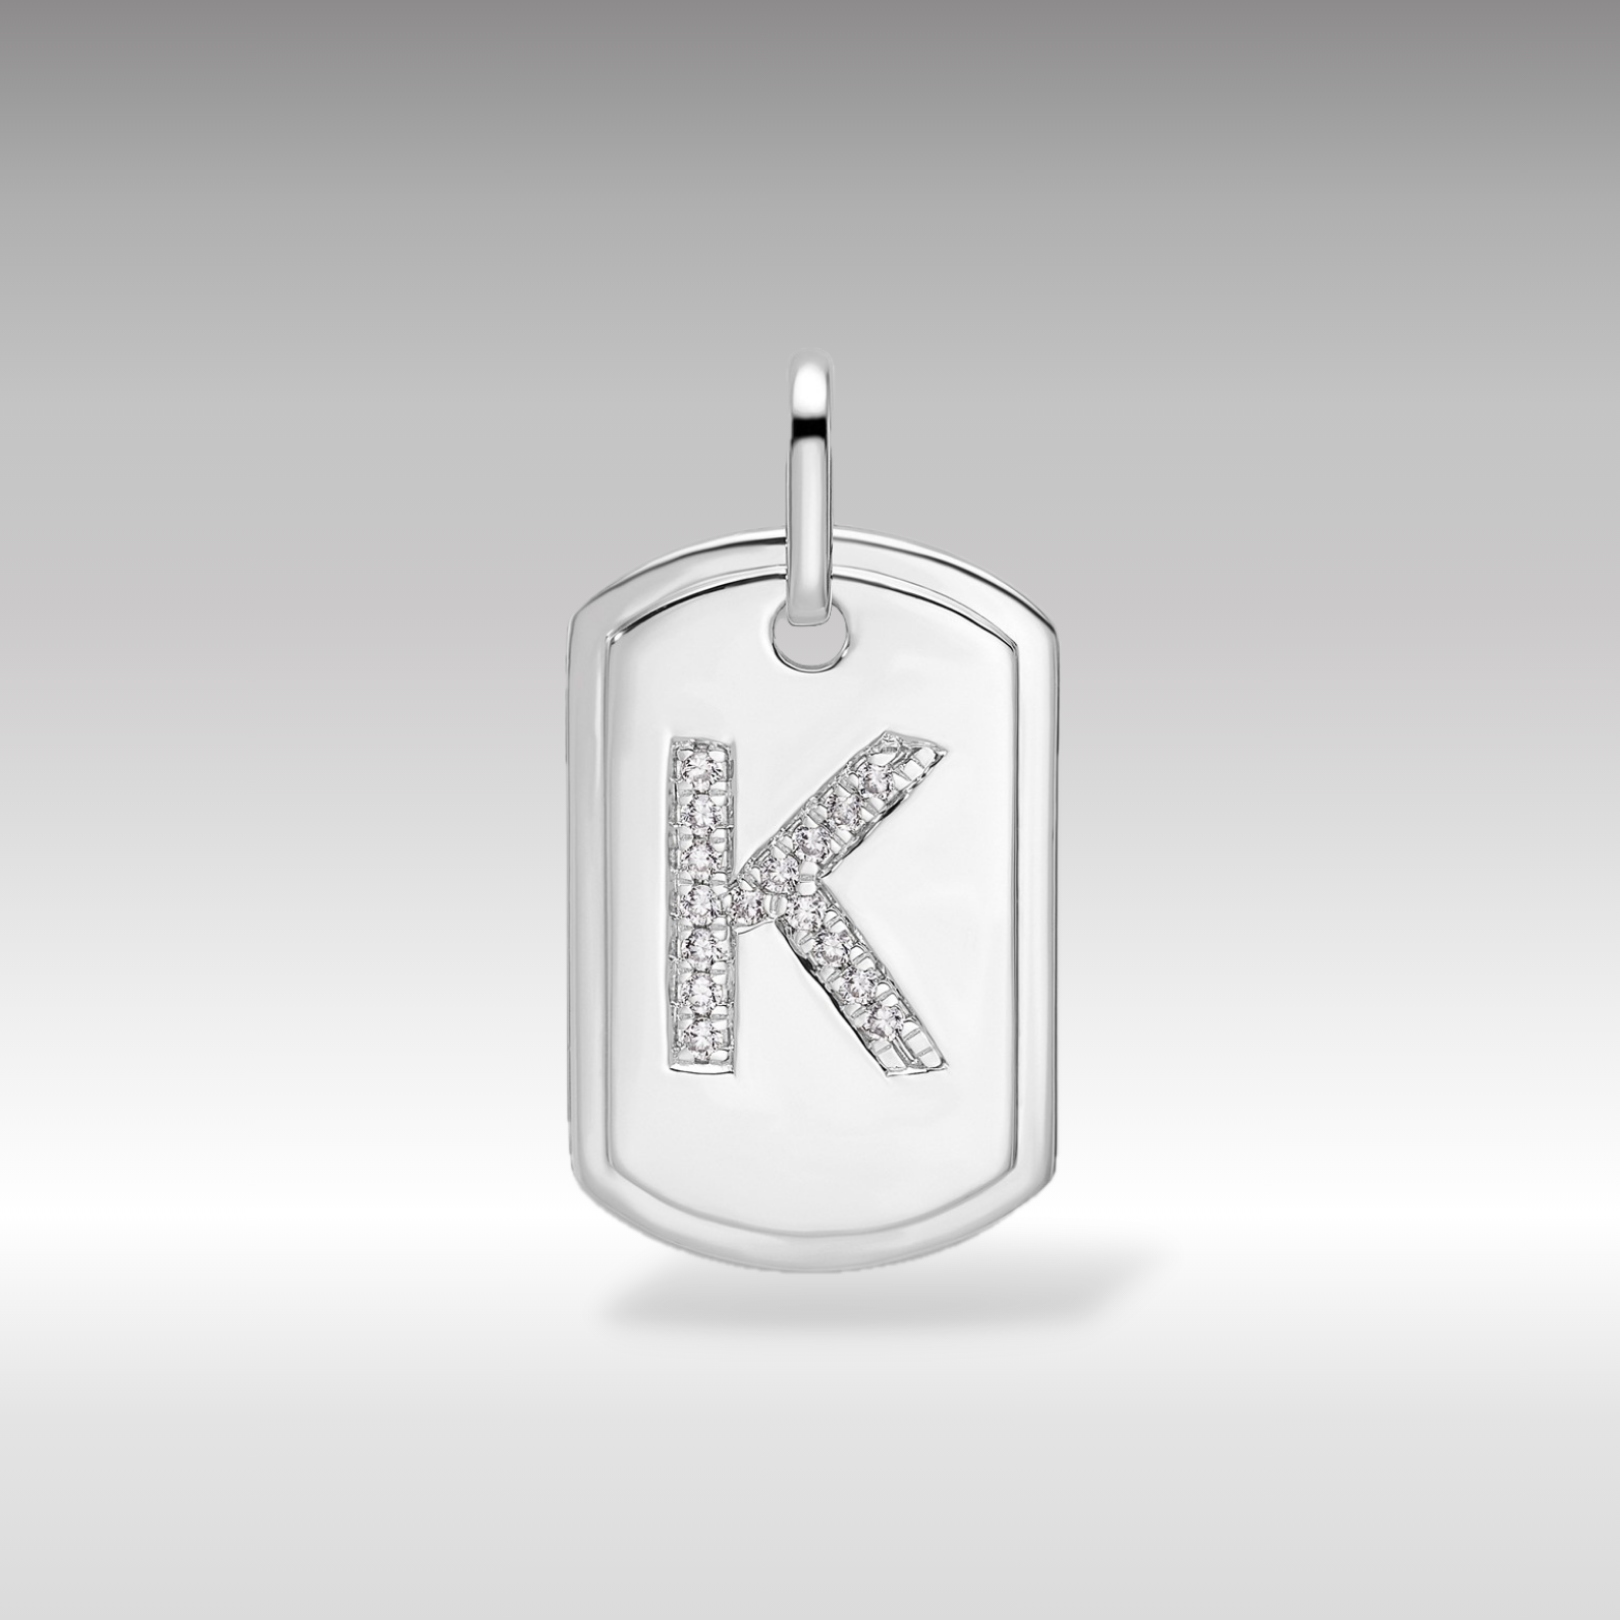 14K White Gold Initial "K" Dog Tag With Genuine Diamonds - Charlie & Co. Jewelry